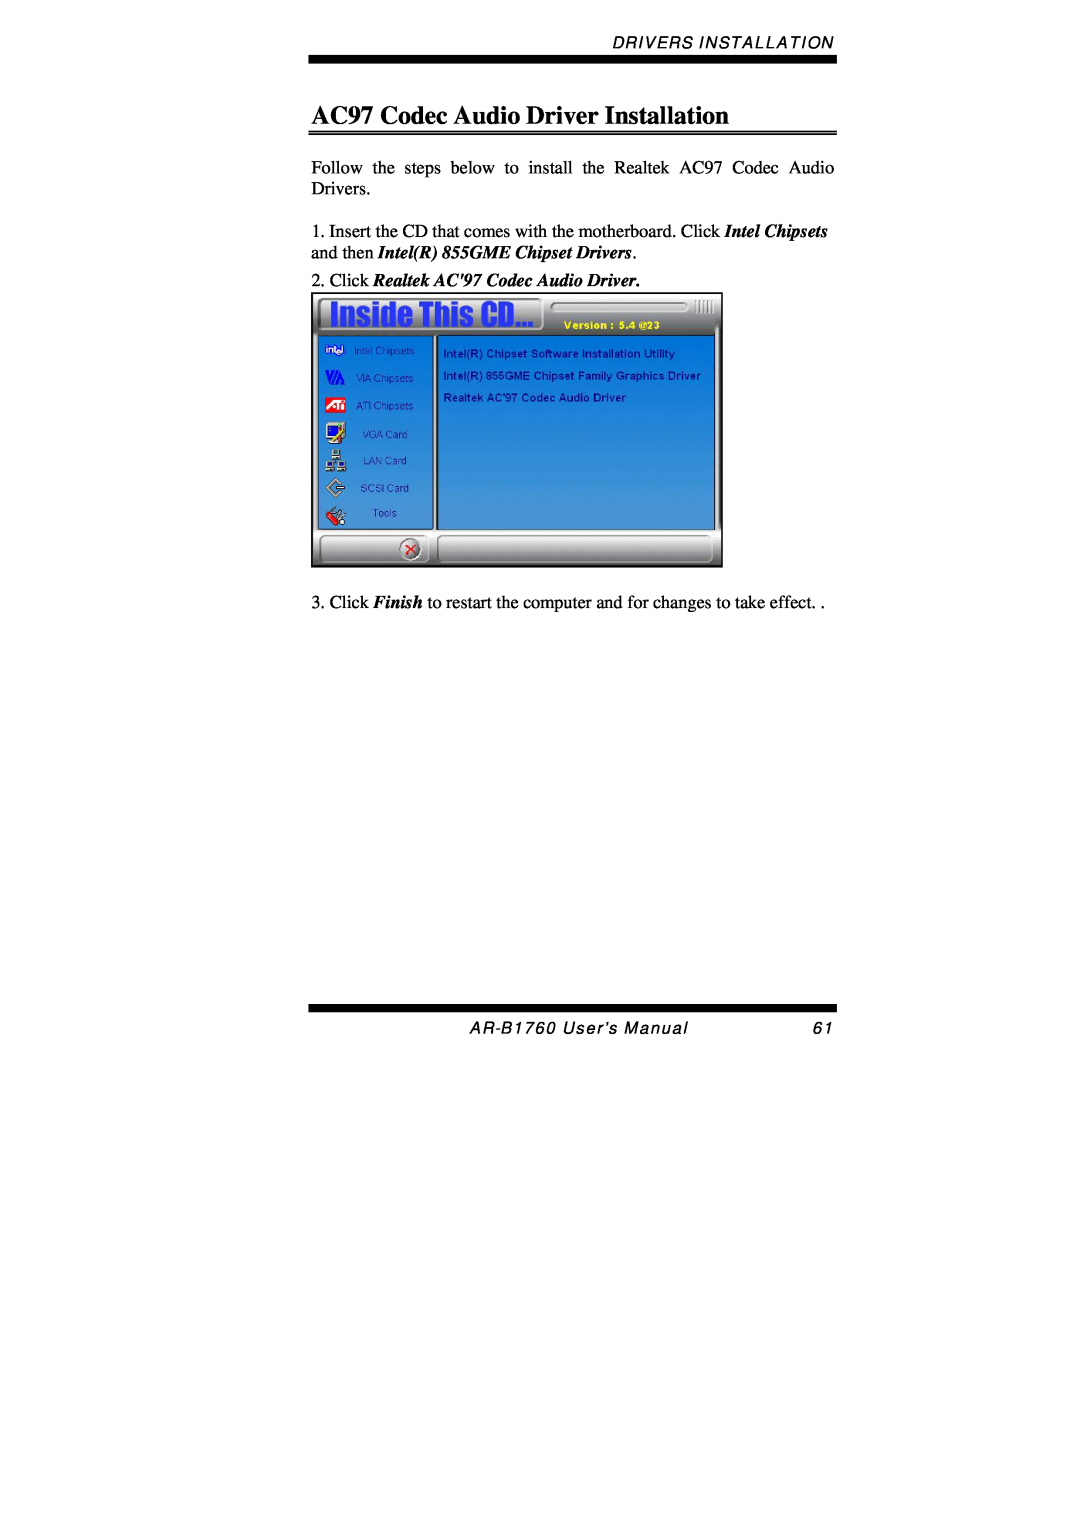 Intel AR-B1760 user manual AC97 Codec Audio Driver Installation, Click Realtek AC97 Codec Audio Driver 